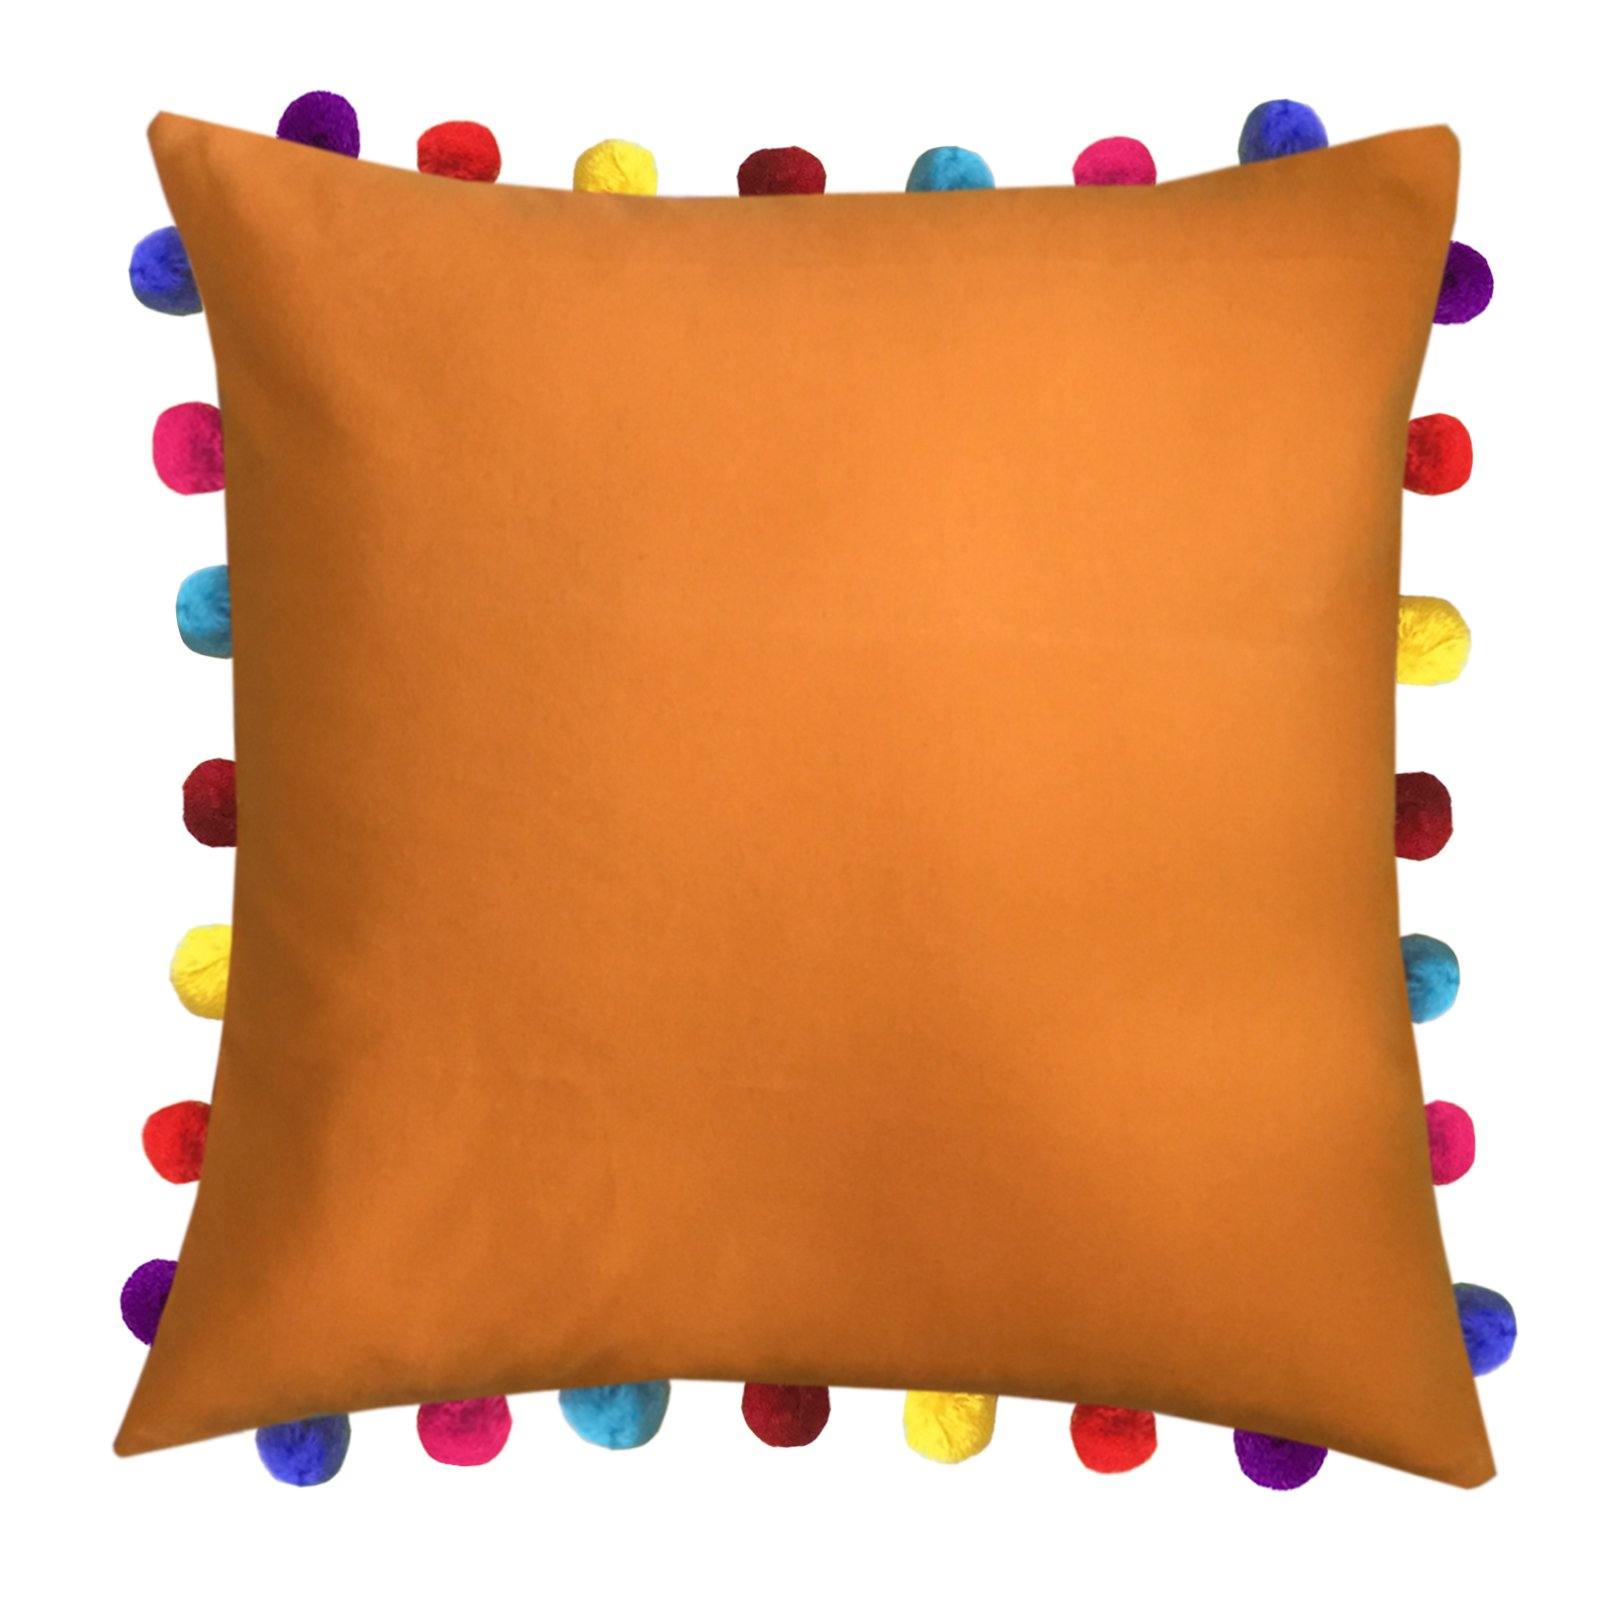 Lushomes Sun Orange Cushion Cover with Colorful Pom Poms (Single pc, 20 x 20”) - Lushomes